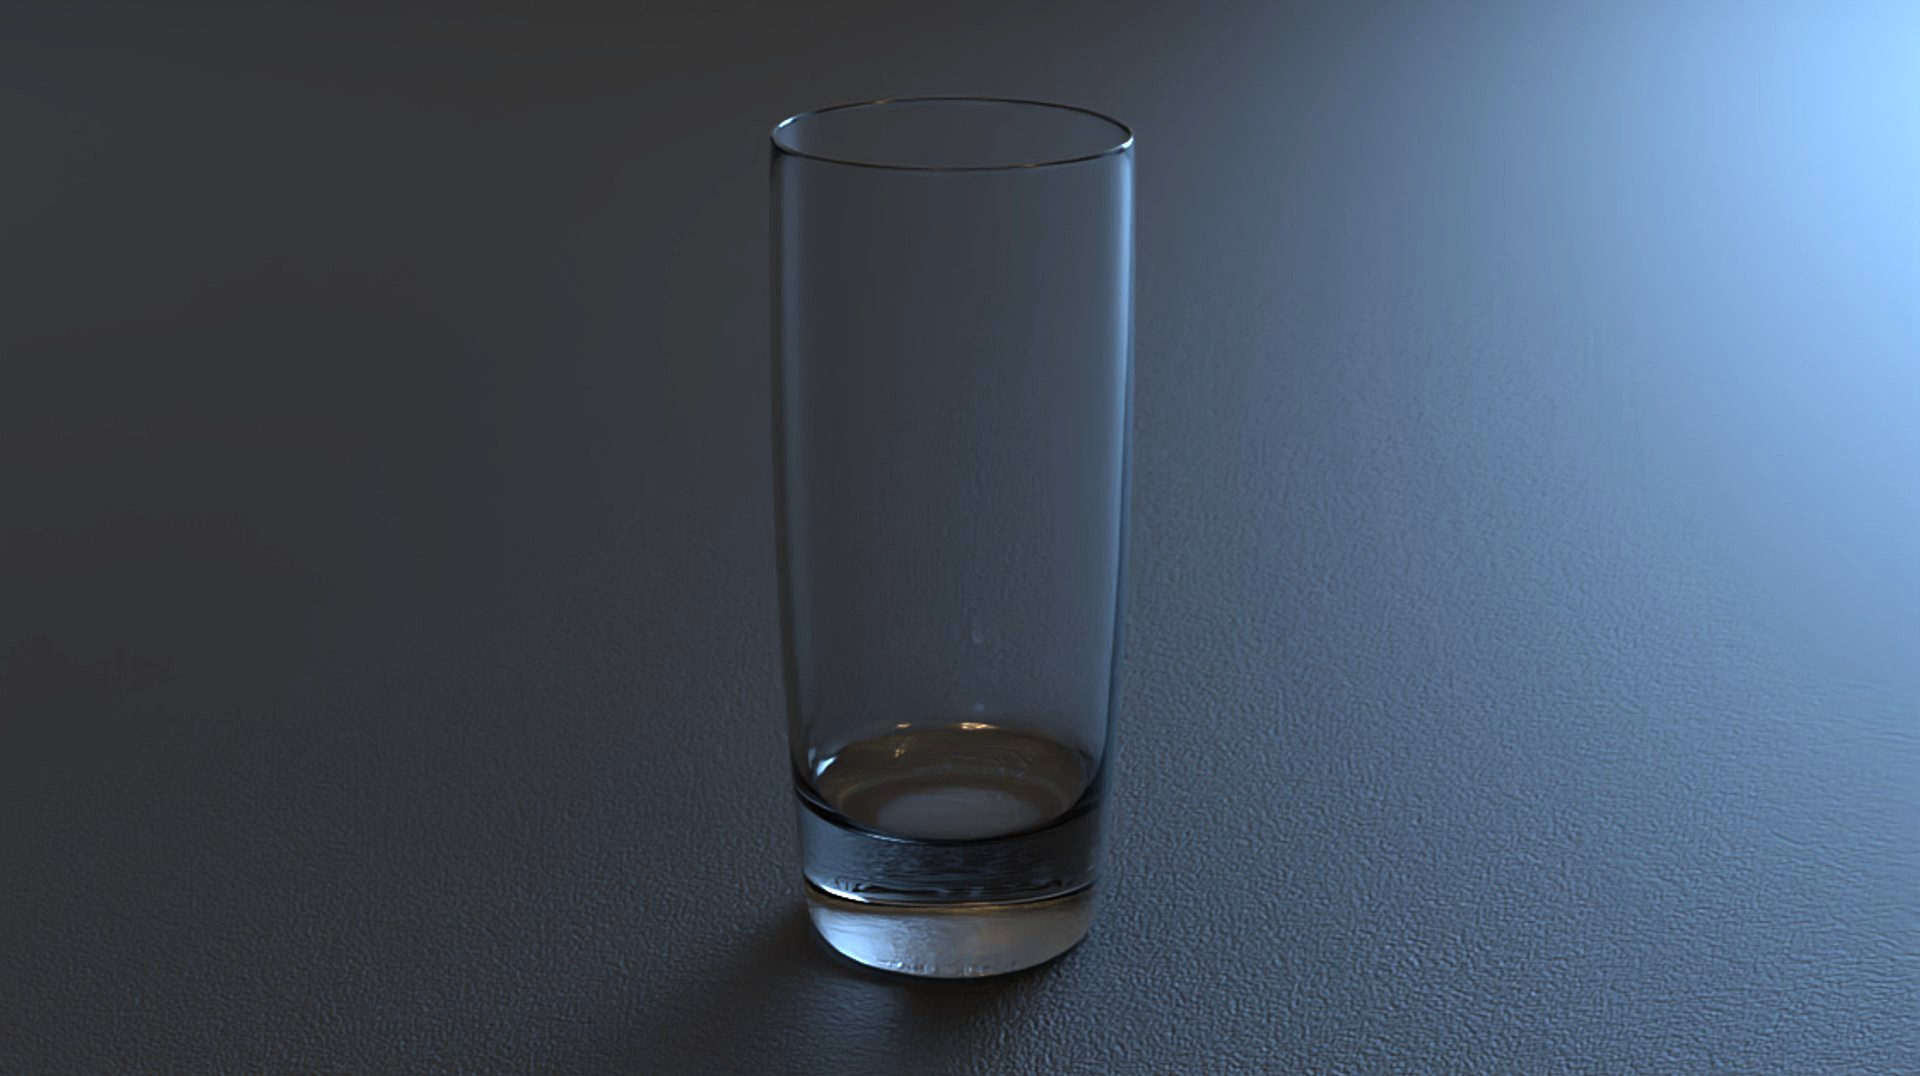 Drinking Glass 3D Model